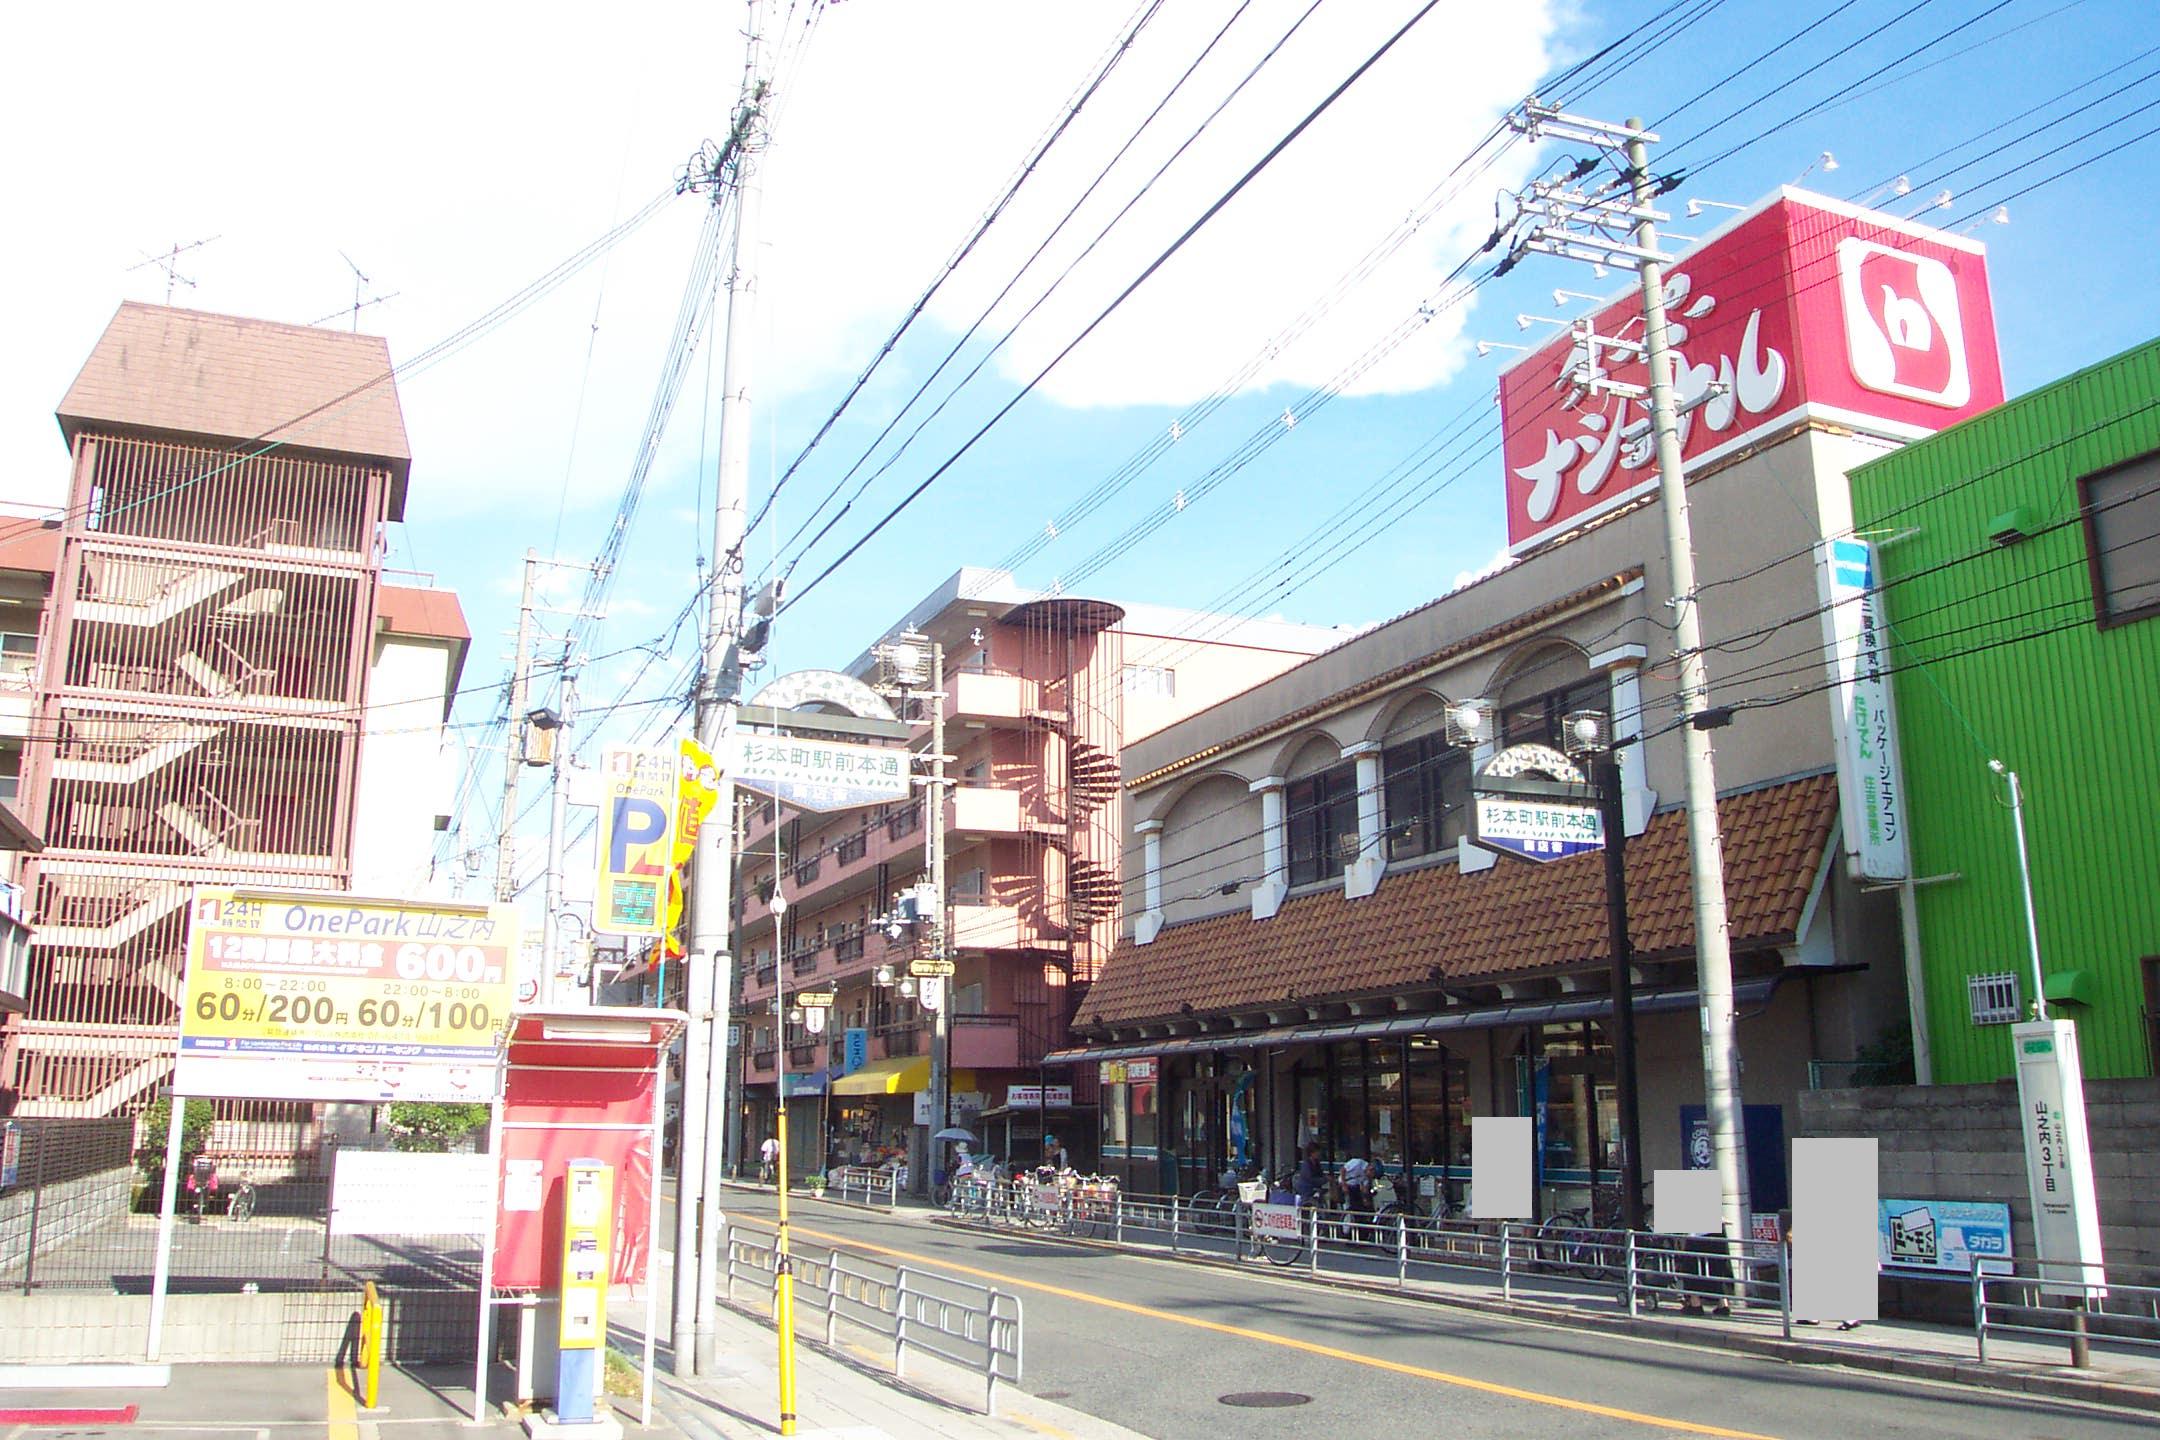 Supermarket. 242m until the Super National Sugimoto store (Super)